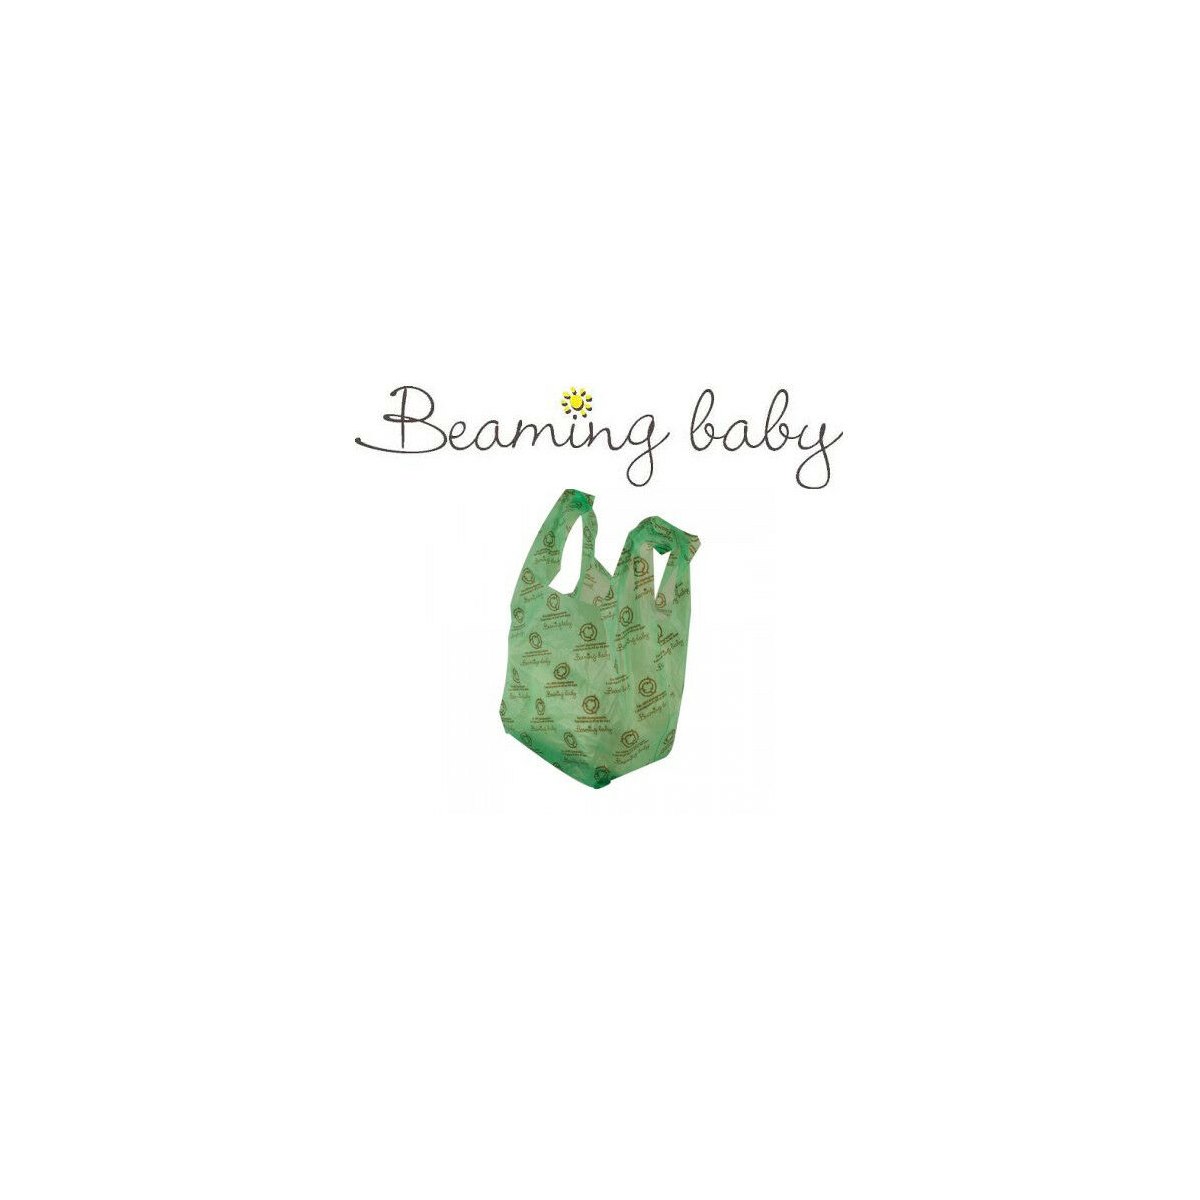 Beaming Baby Biodegradeable Nappy Sacks